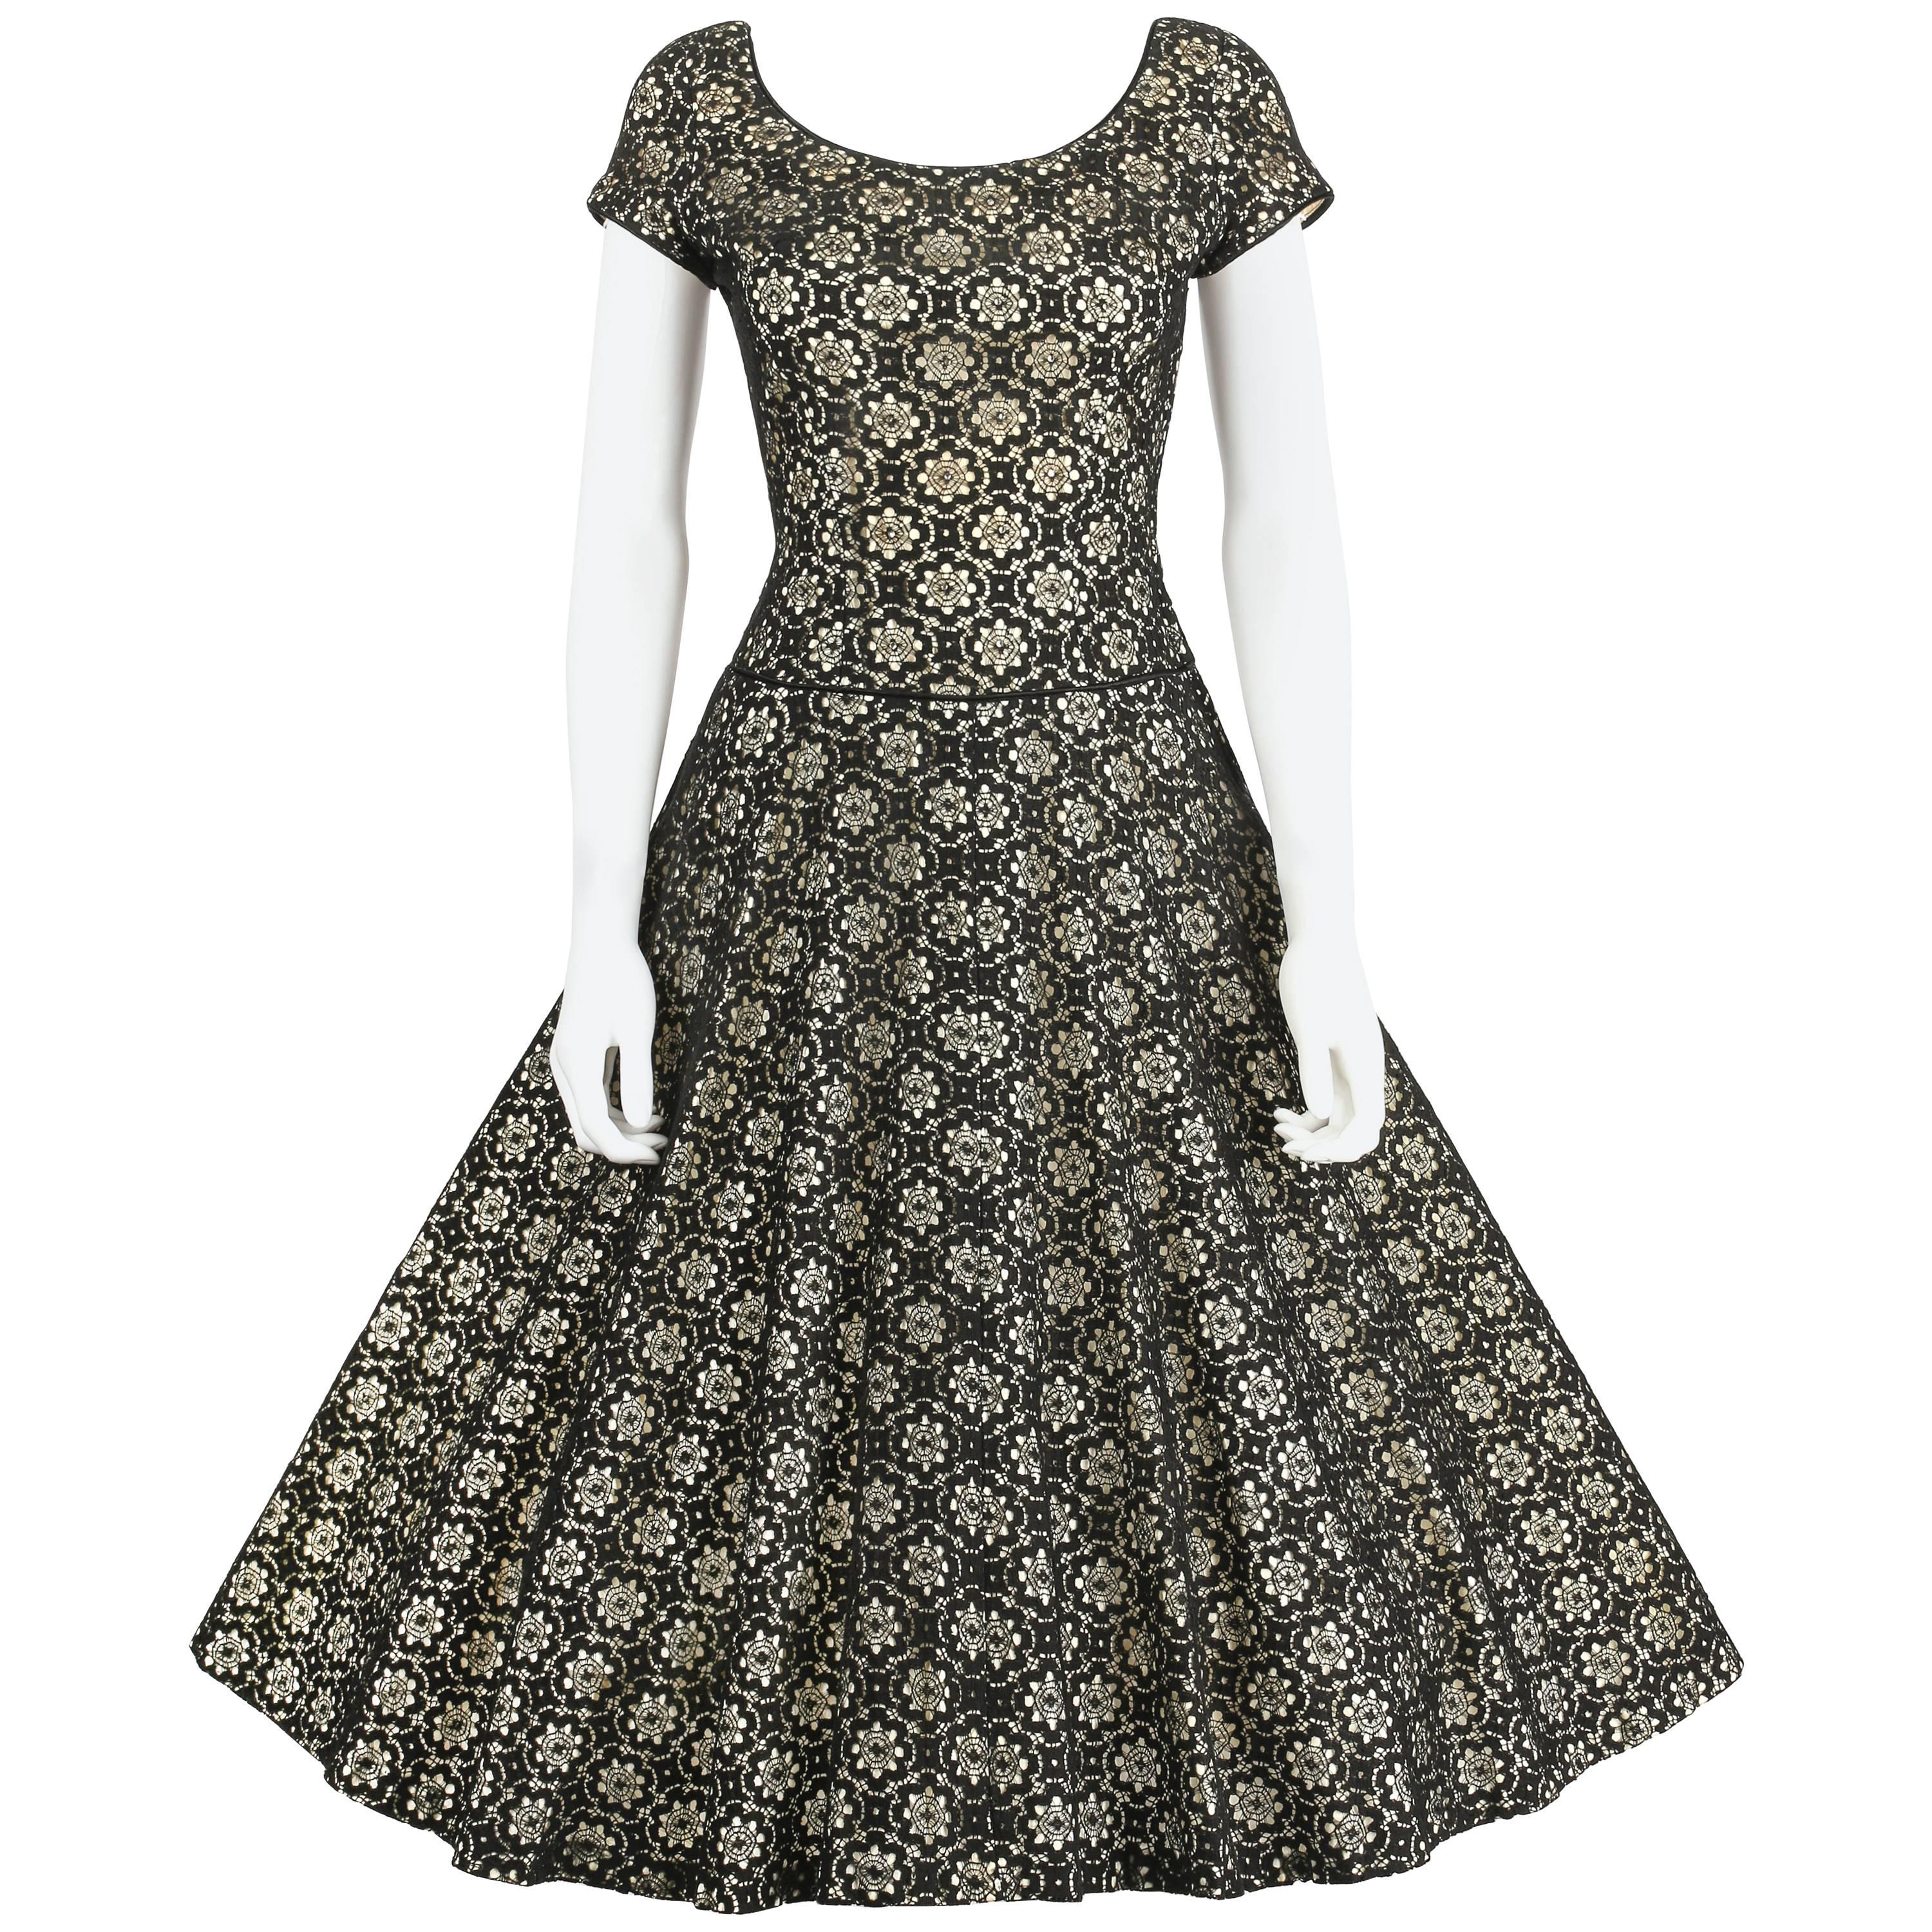 MISS JANE JUNIOR c.1950's Black Floral Lace Rhinestone Embellished Party Dress